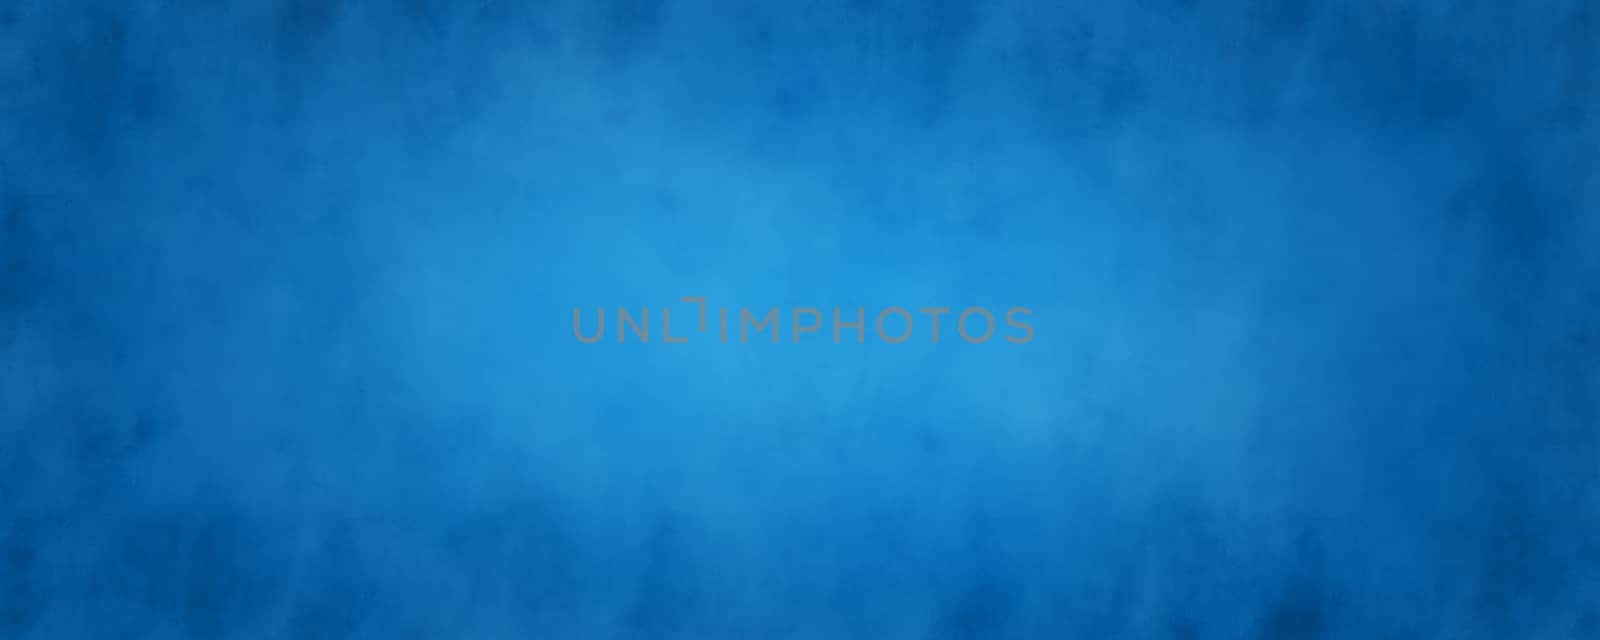 Blue background with grunge texture, elegant luxury backdrop pai by anlomaja